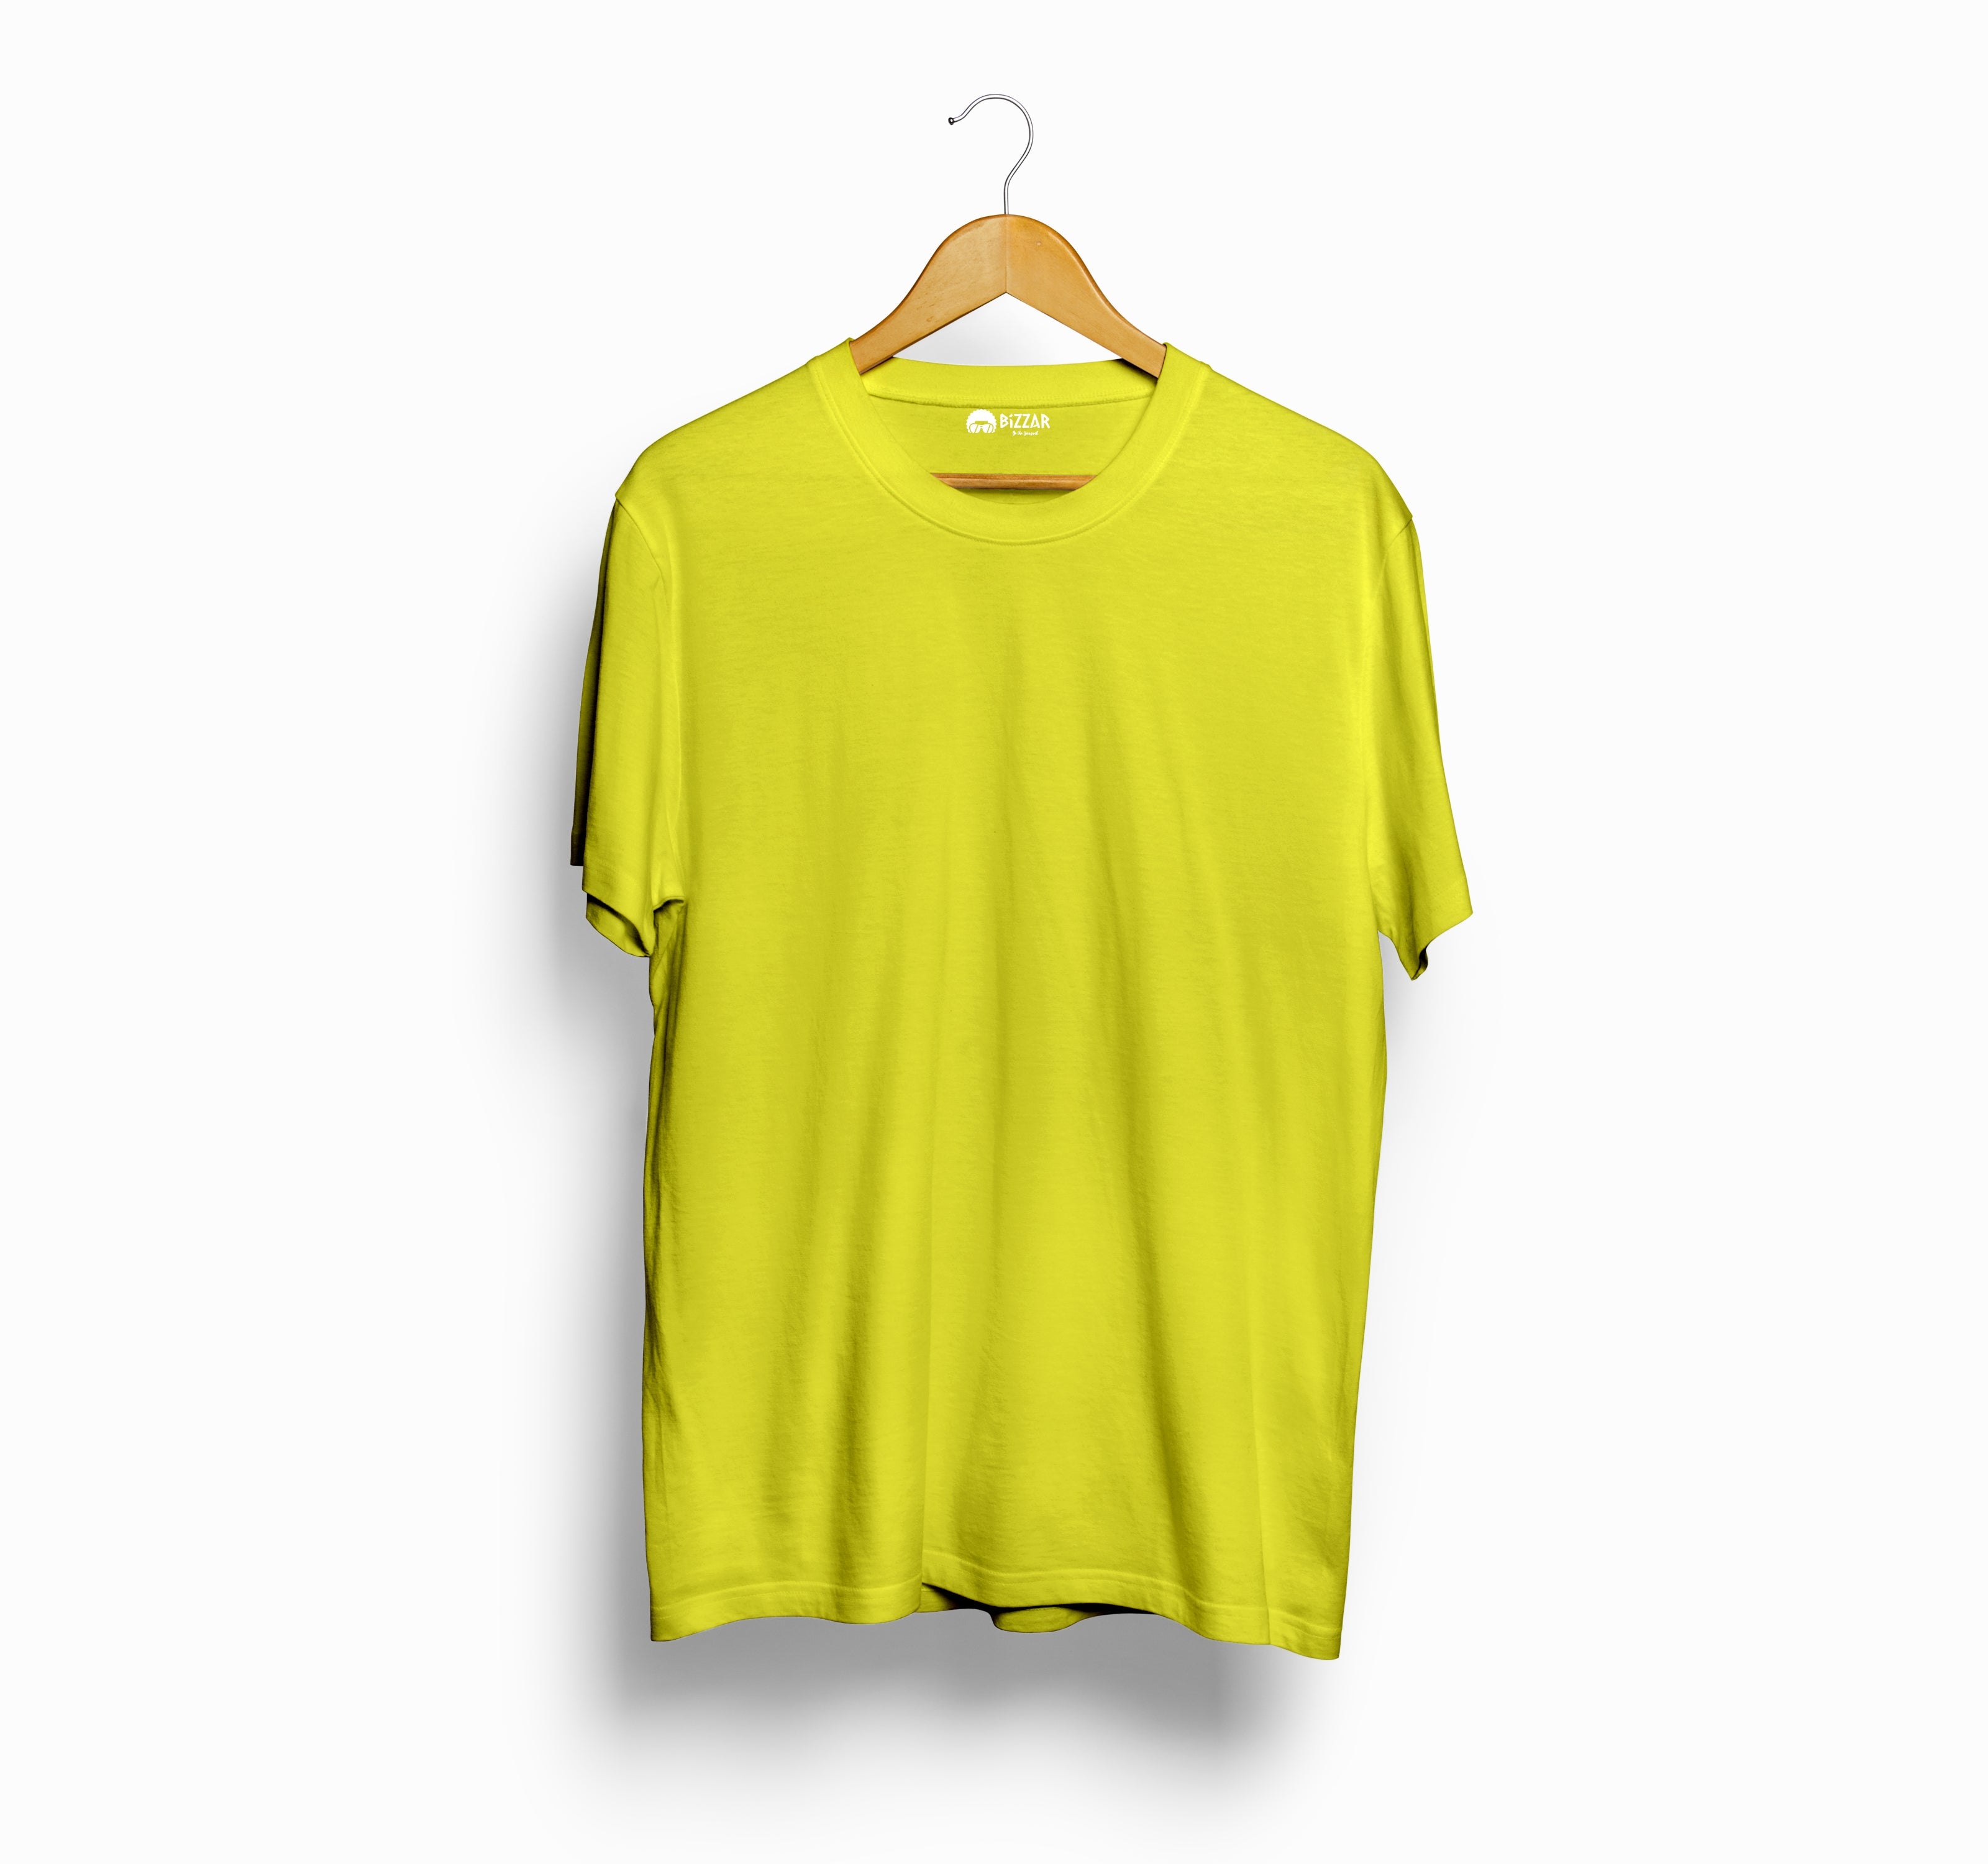 Bizzar's Bright Yellow T-Shirt